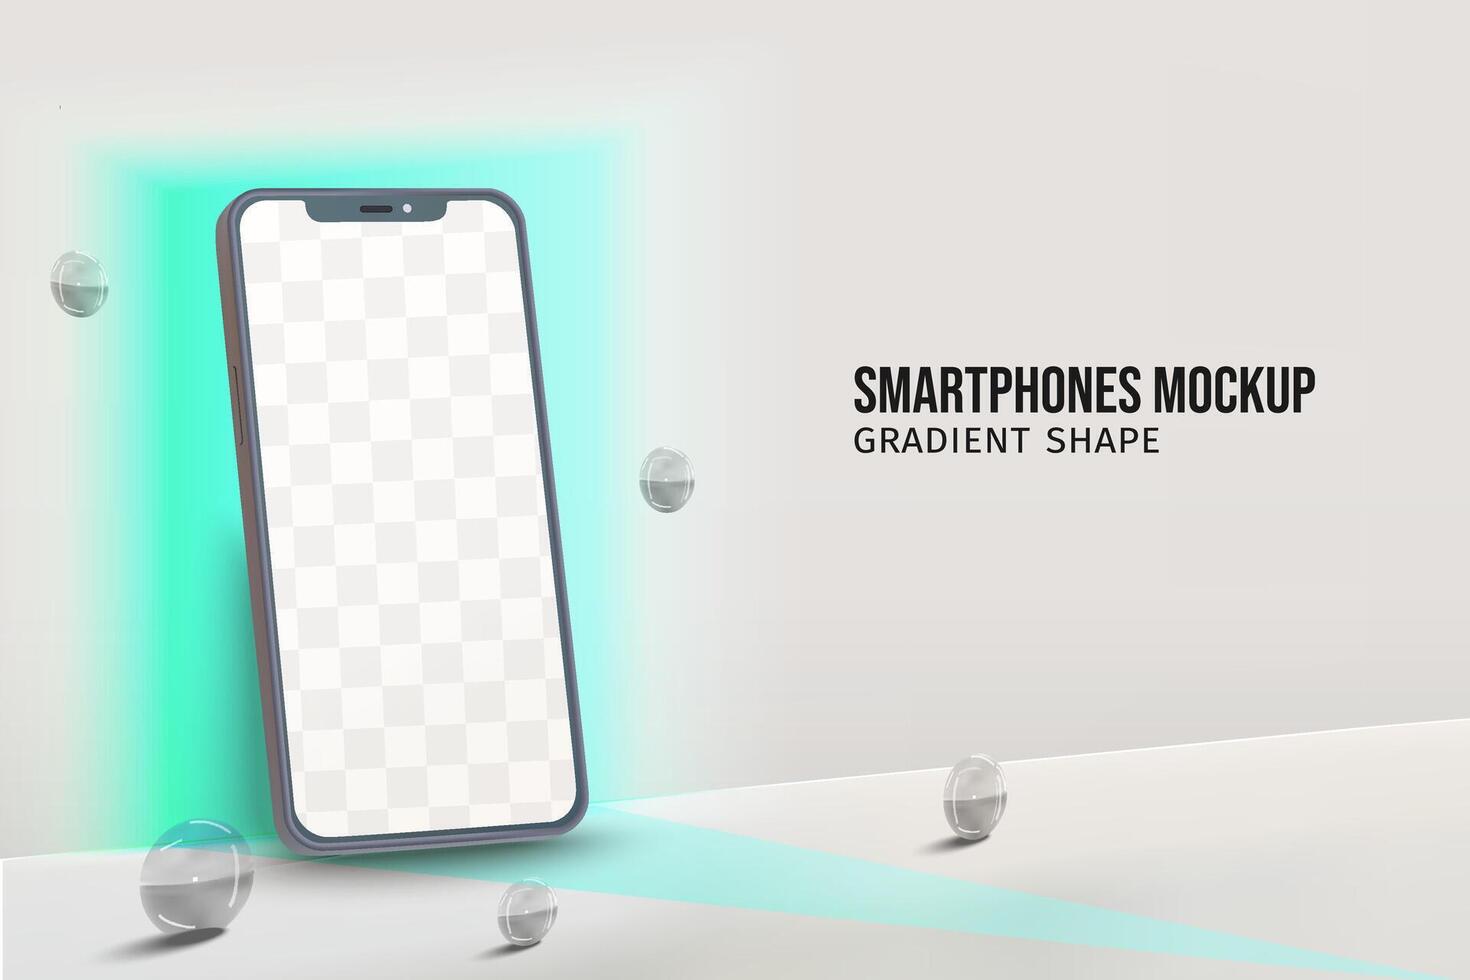 Smartphone mockup scene with bright gradient shape vector